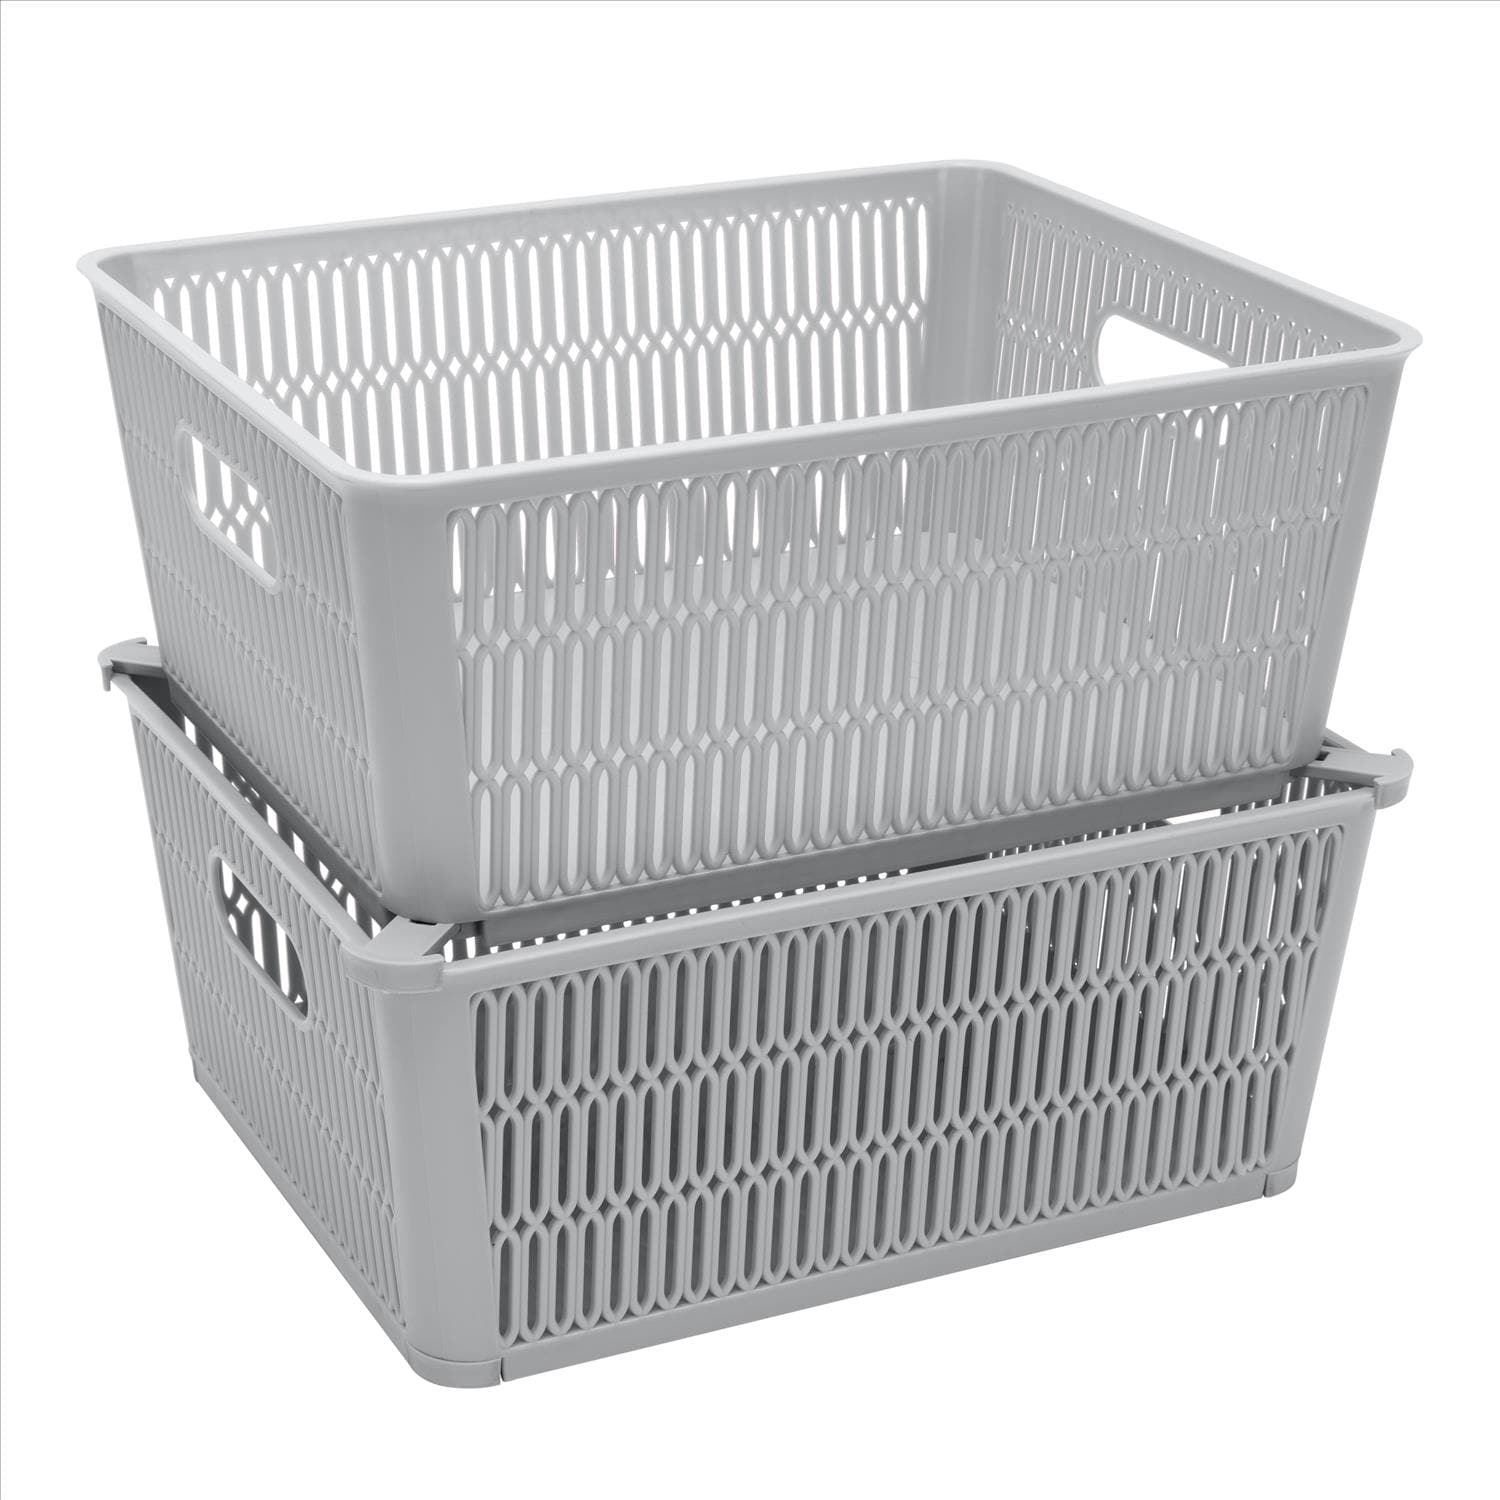 New 2x Plastic Stackable Basket Multi-Purpose Storage Basket Home Office 